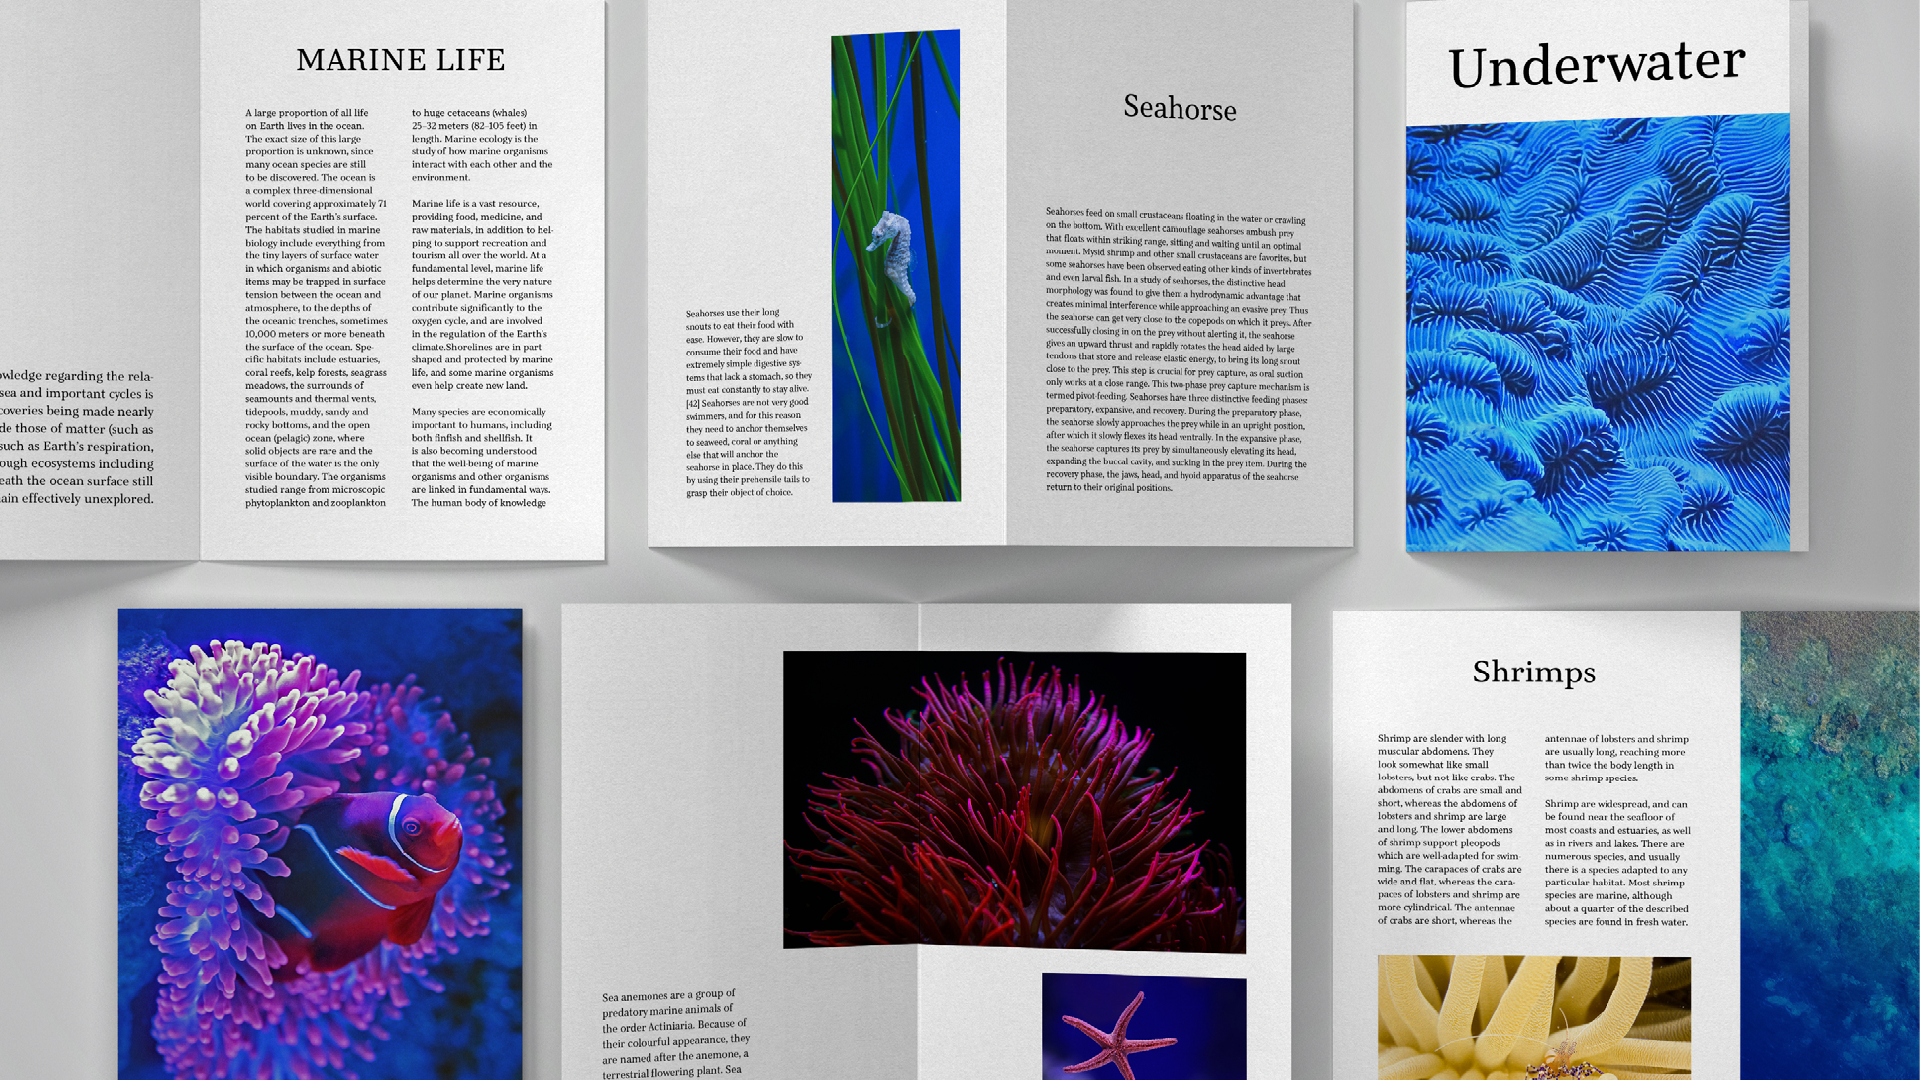 Leaflet about marine life written with Explorama typeface